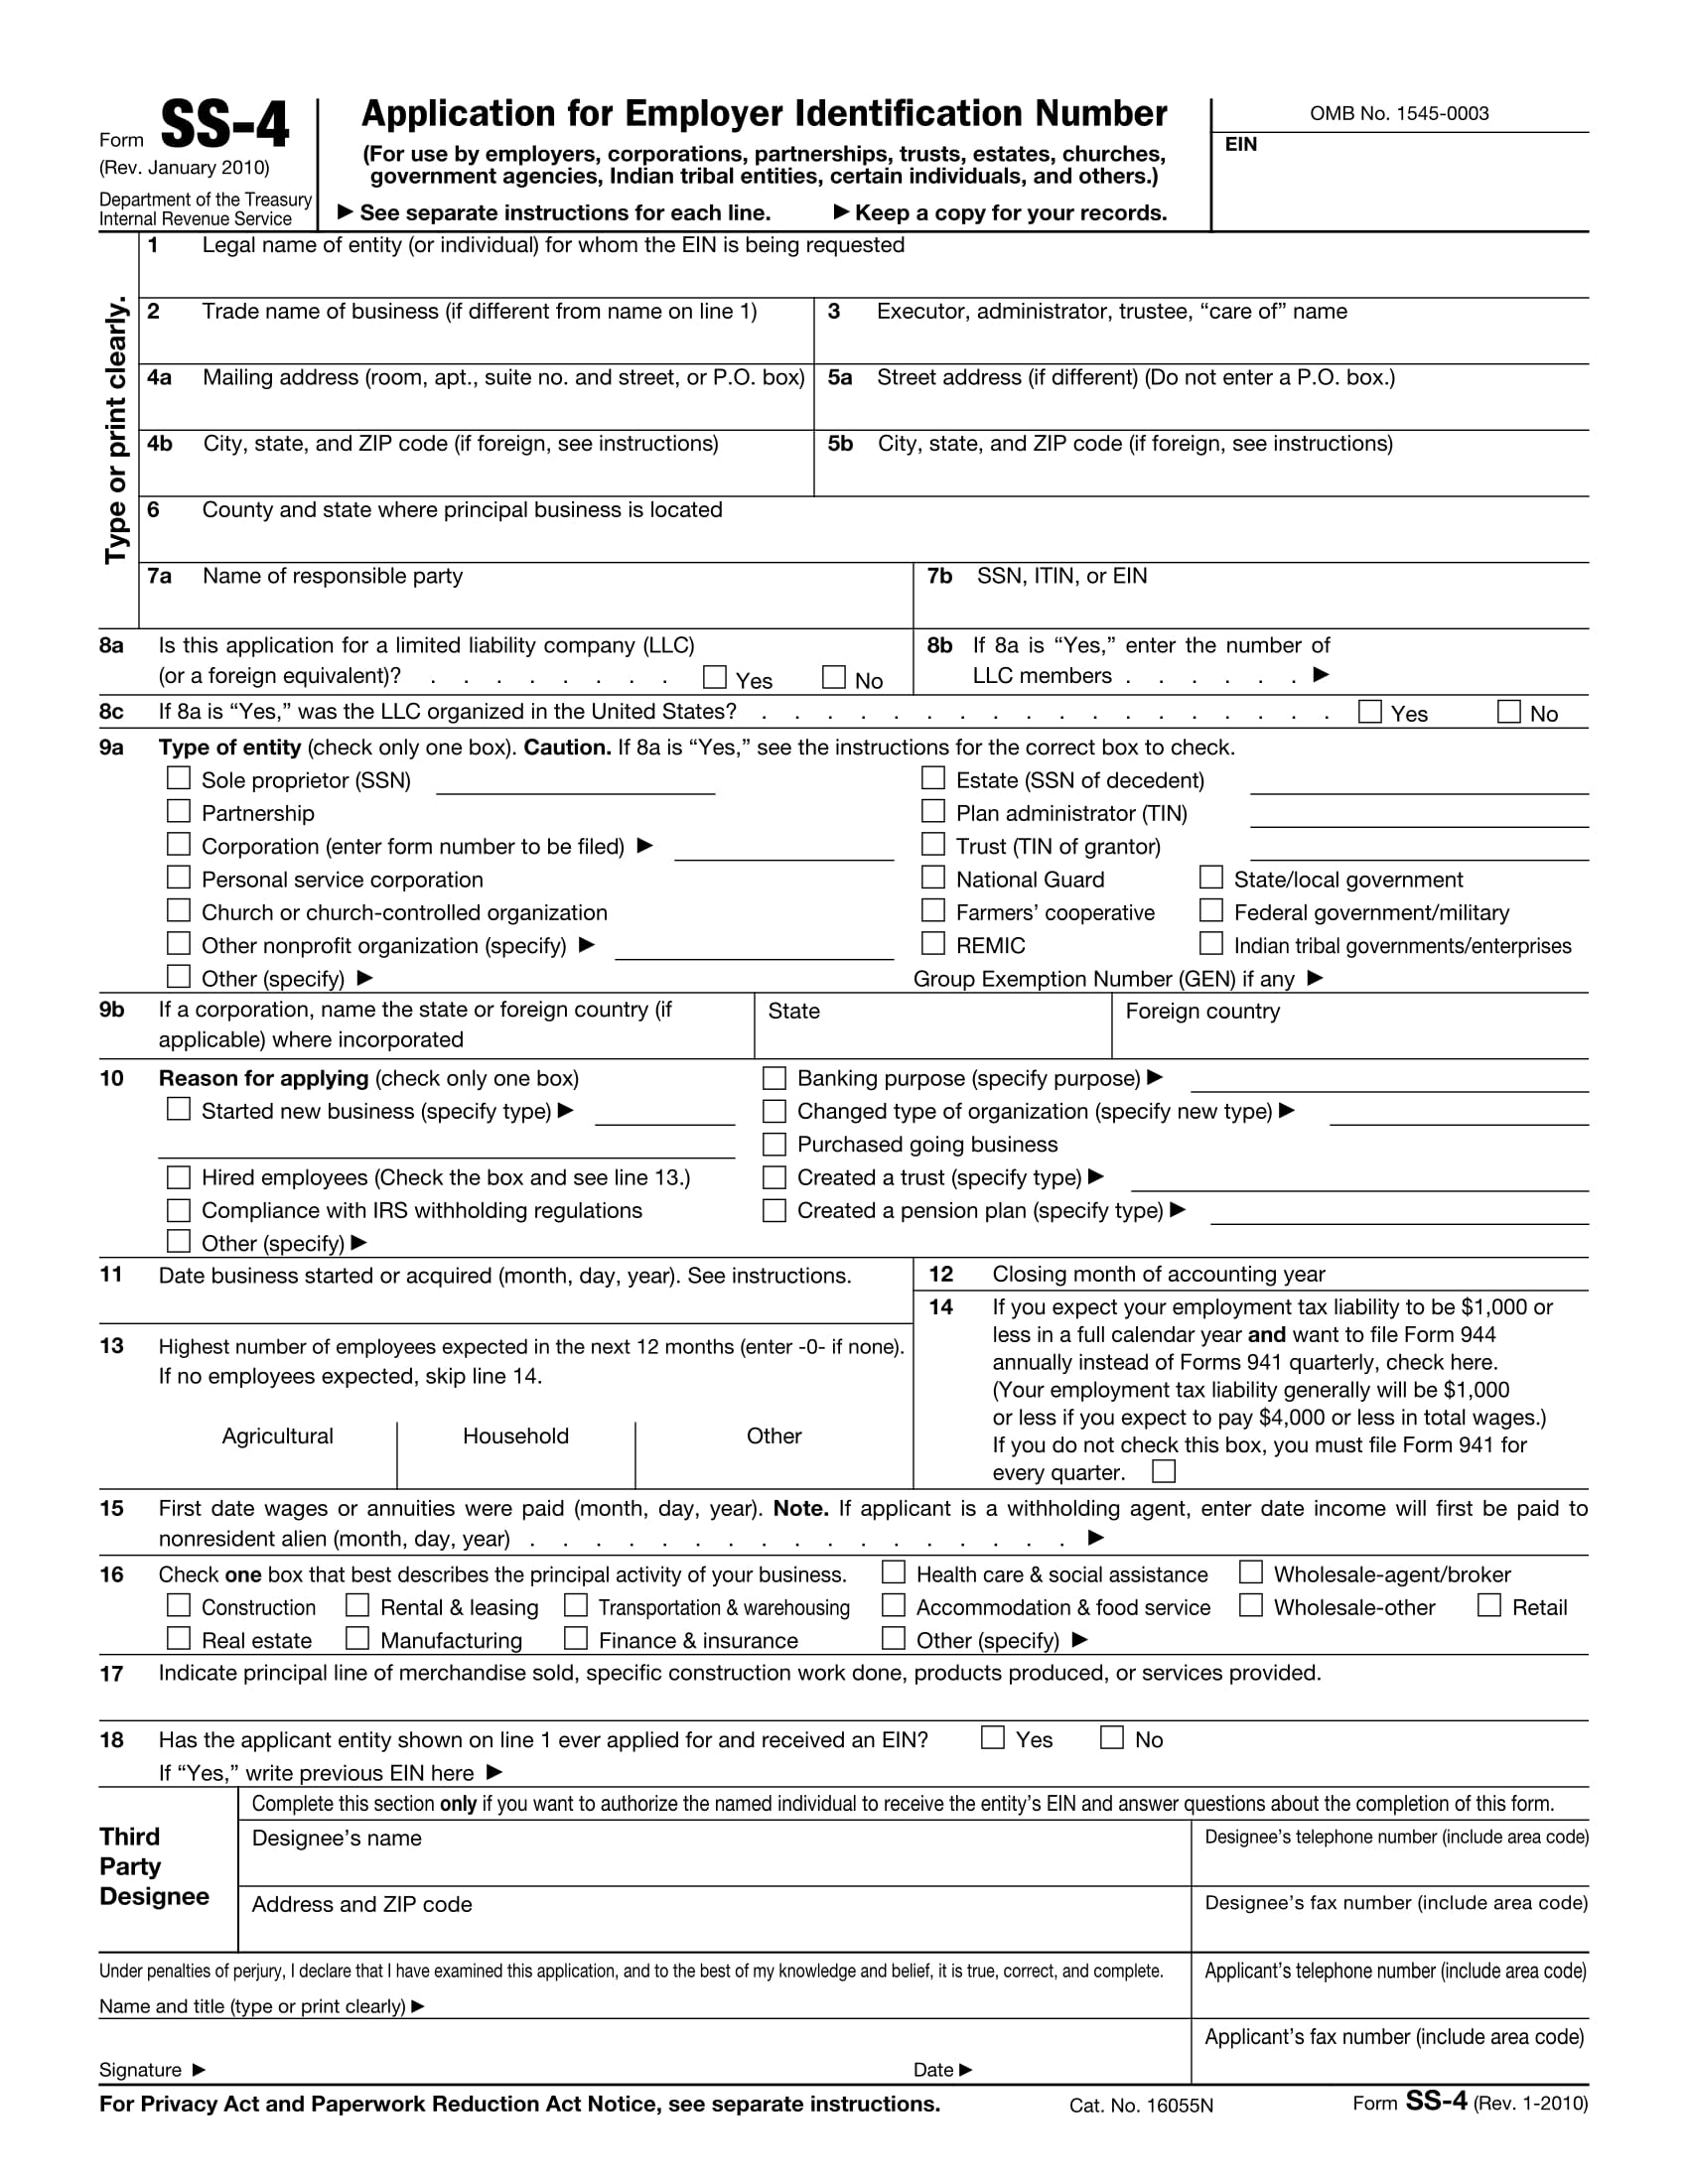 federal tax application form employer identification numer 2